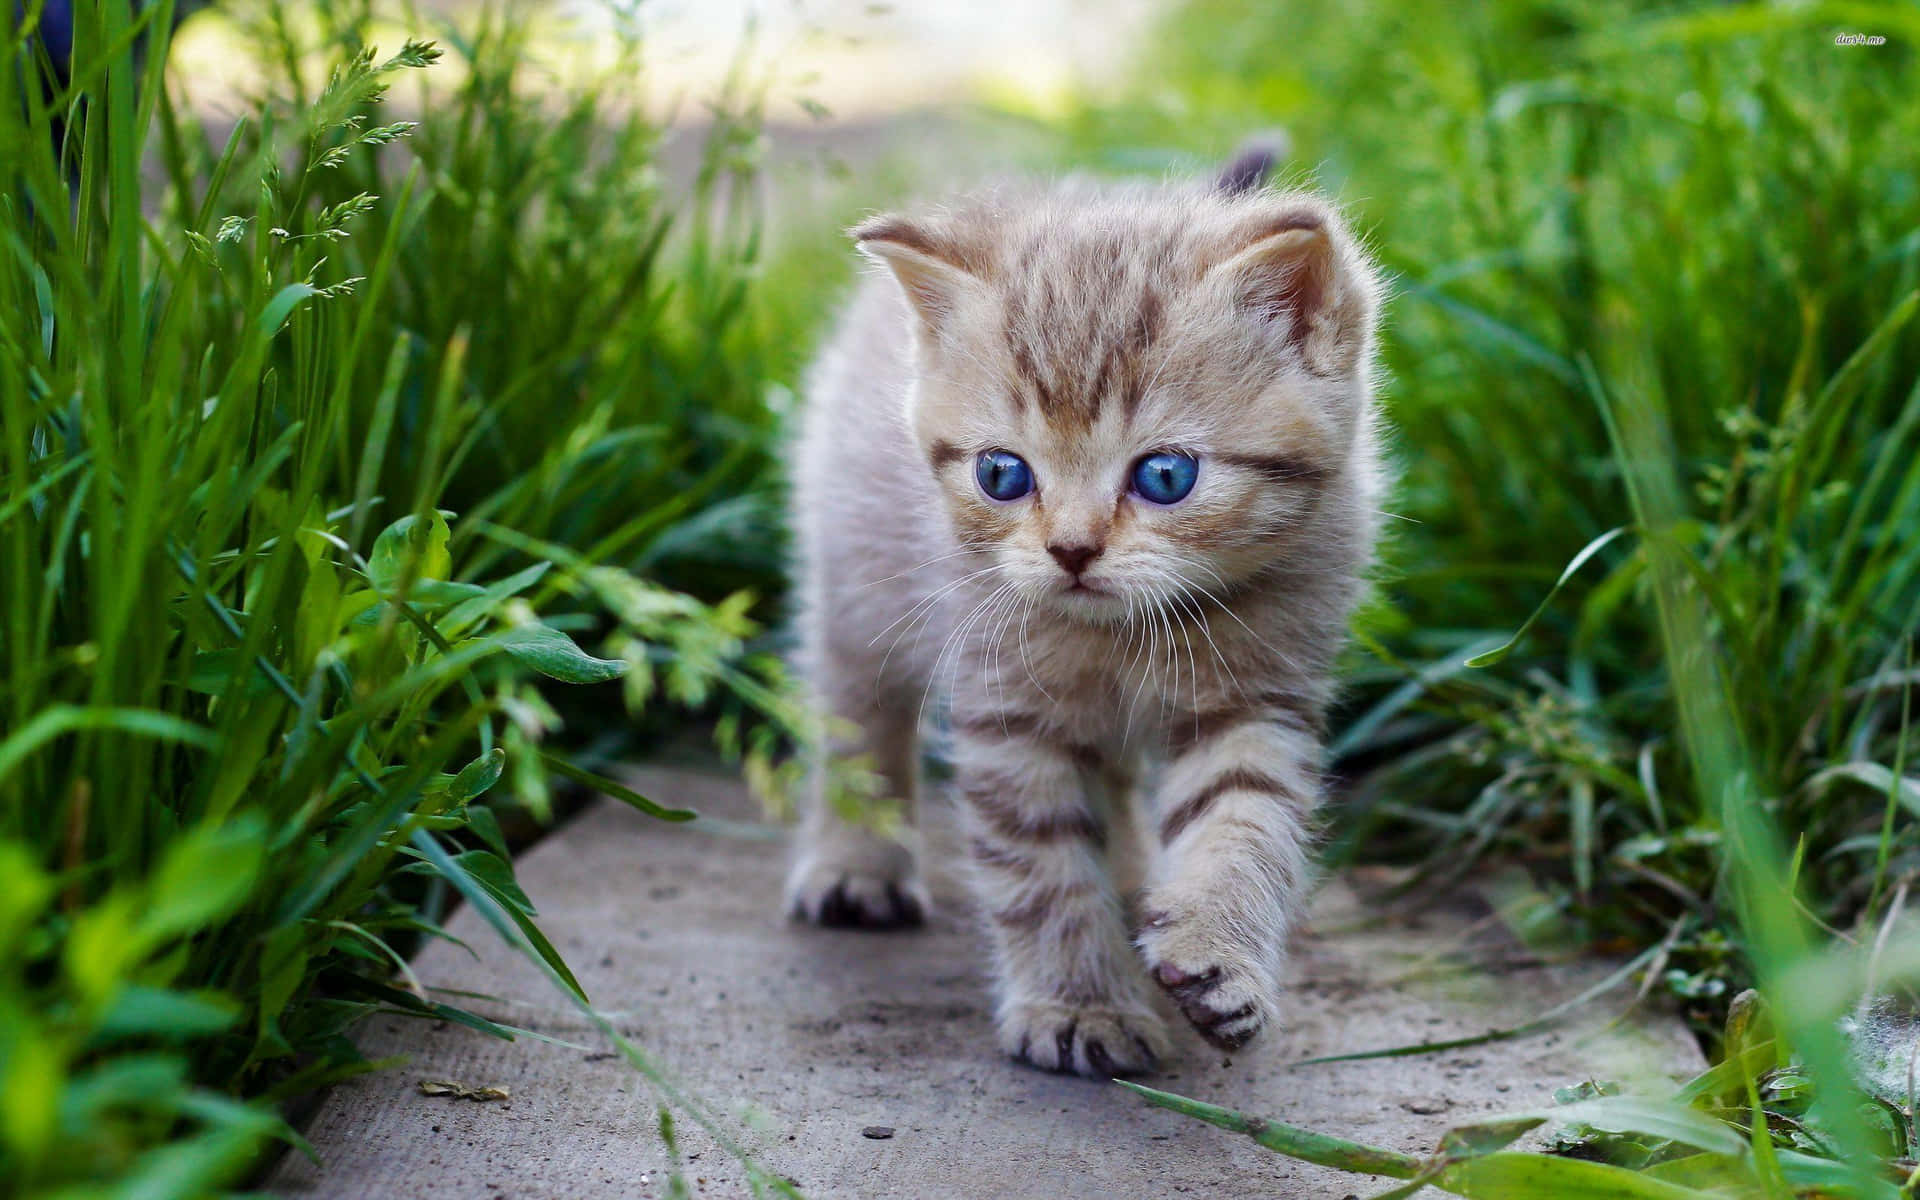 a kitten walking through the grass with blue eyes